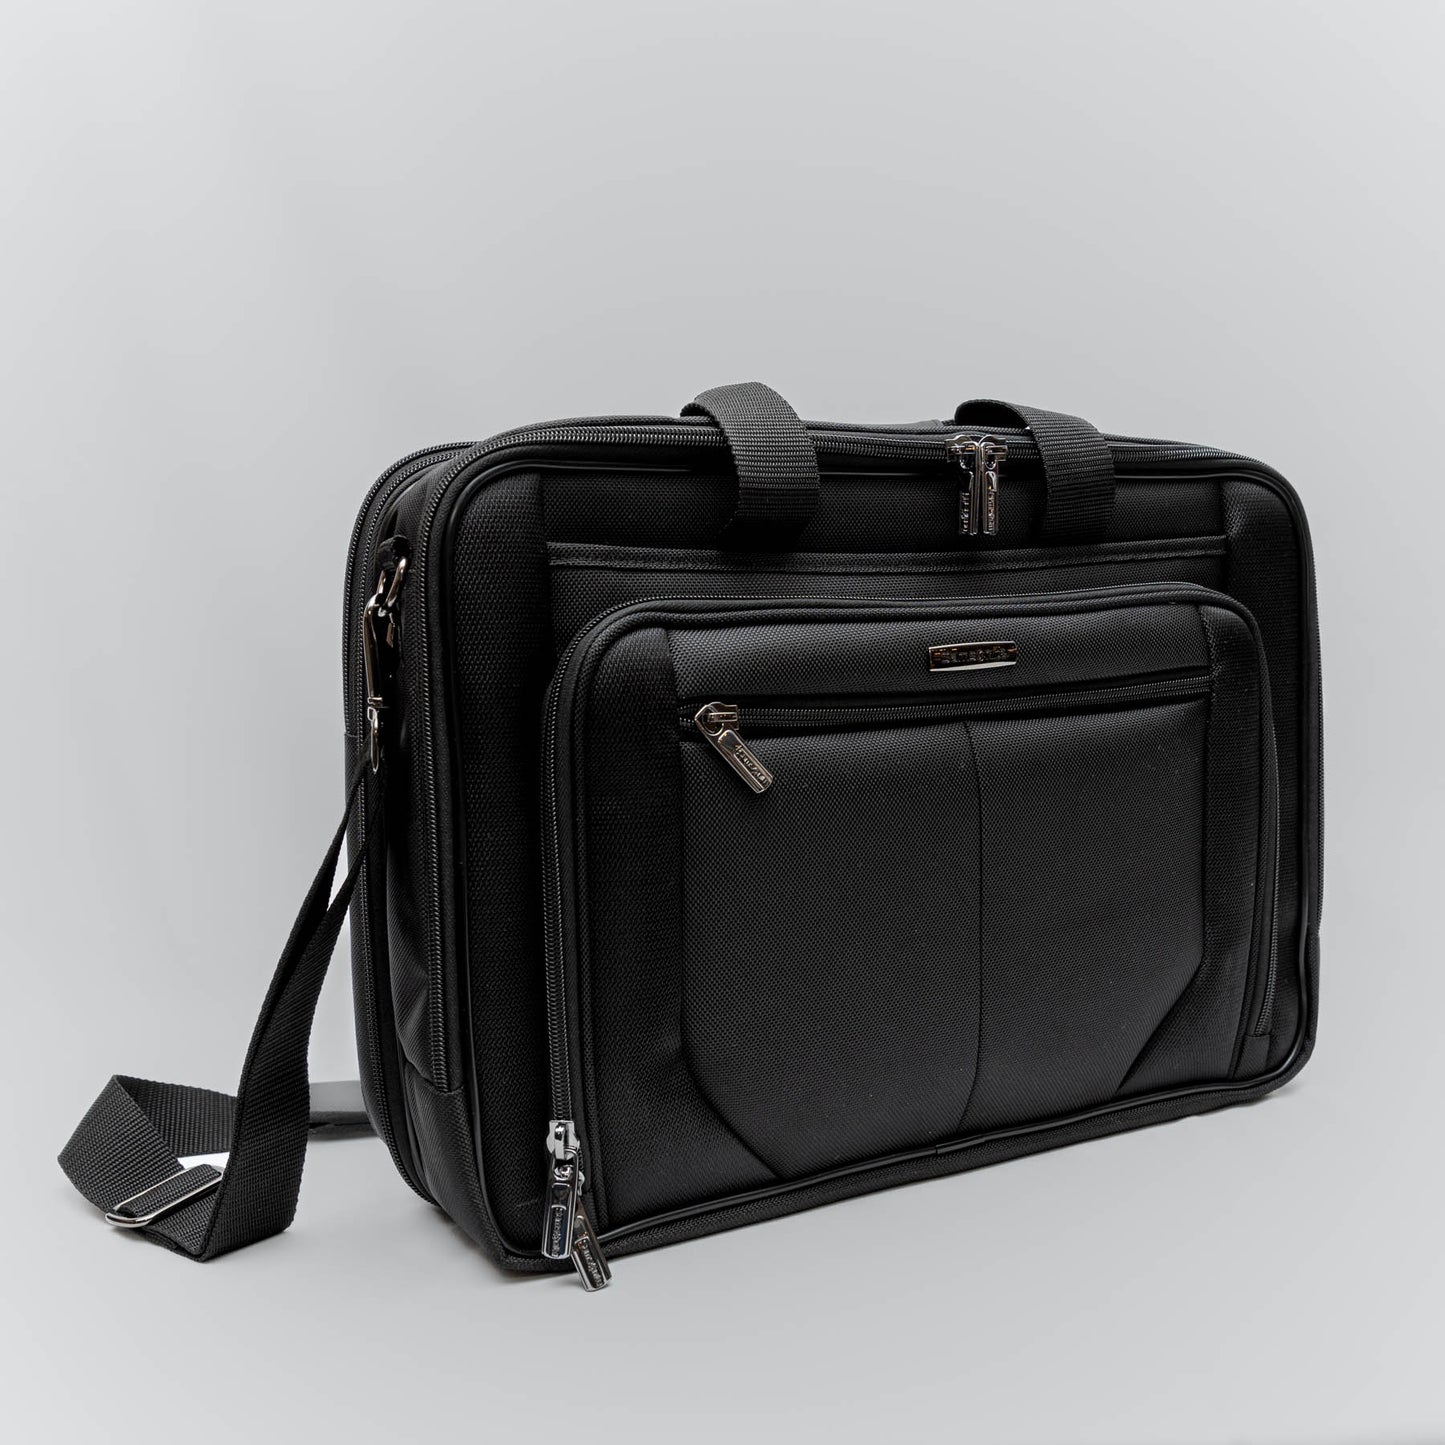 Samsonite - Checkpoint Friendly Computer Case Bag 17.3”